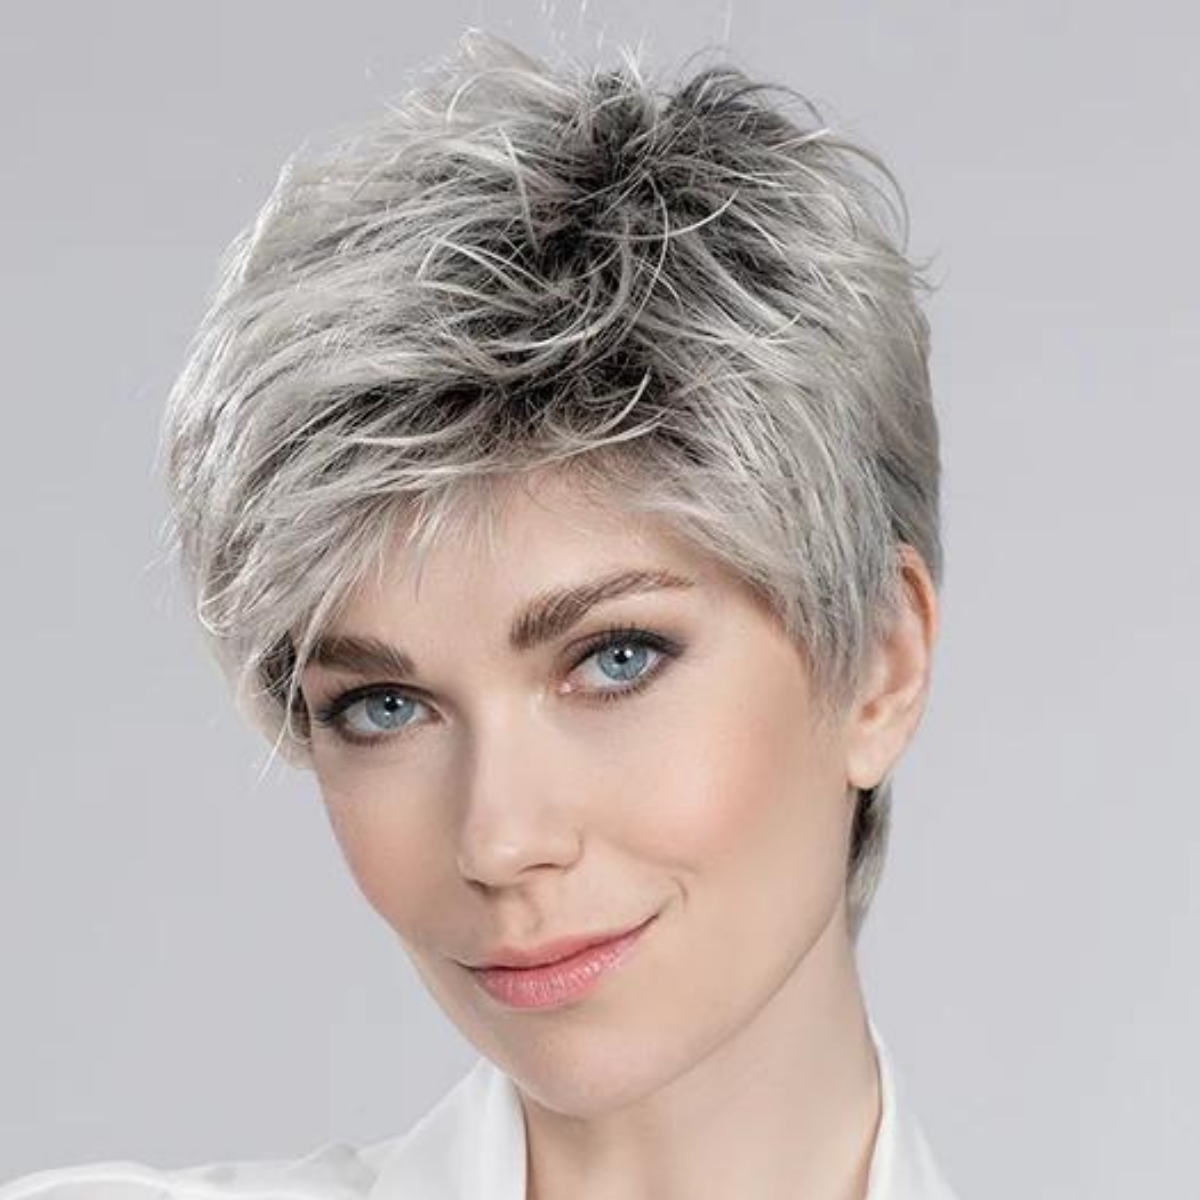 Spring Hi - Hair Power Collection by Ellen Wille